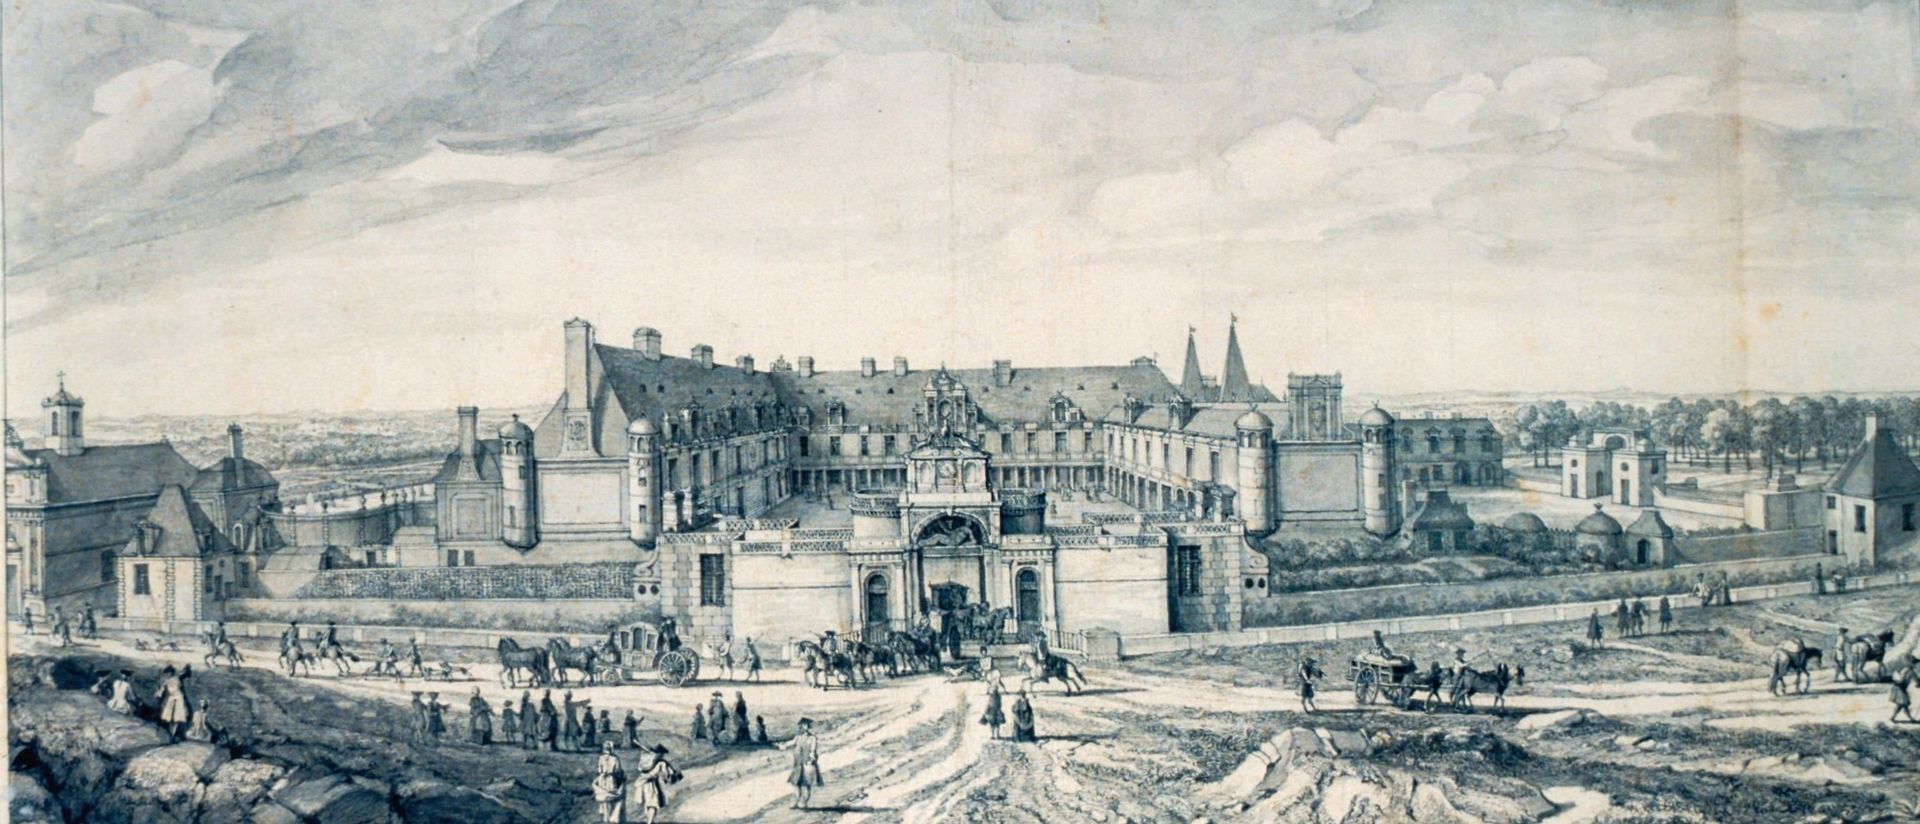 Le château d’Anet au XVIIIe siècle…